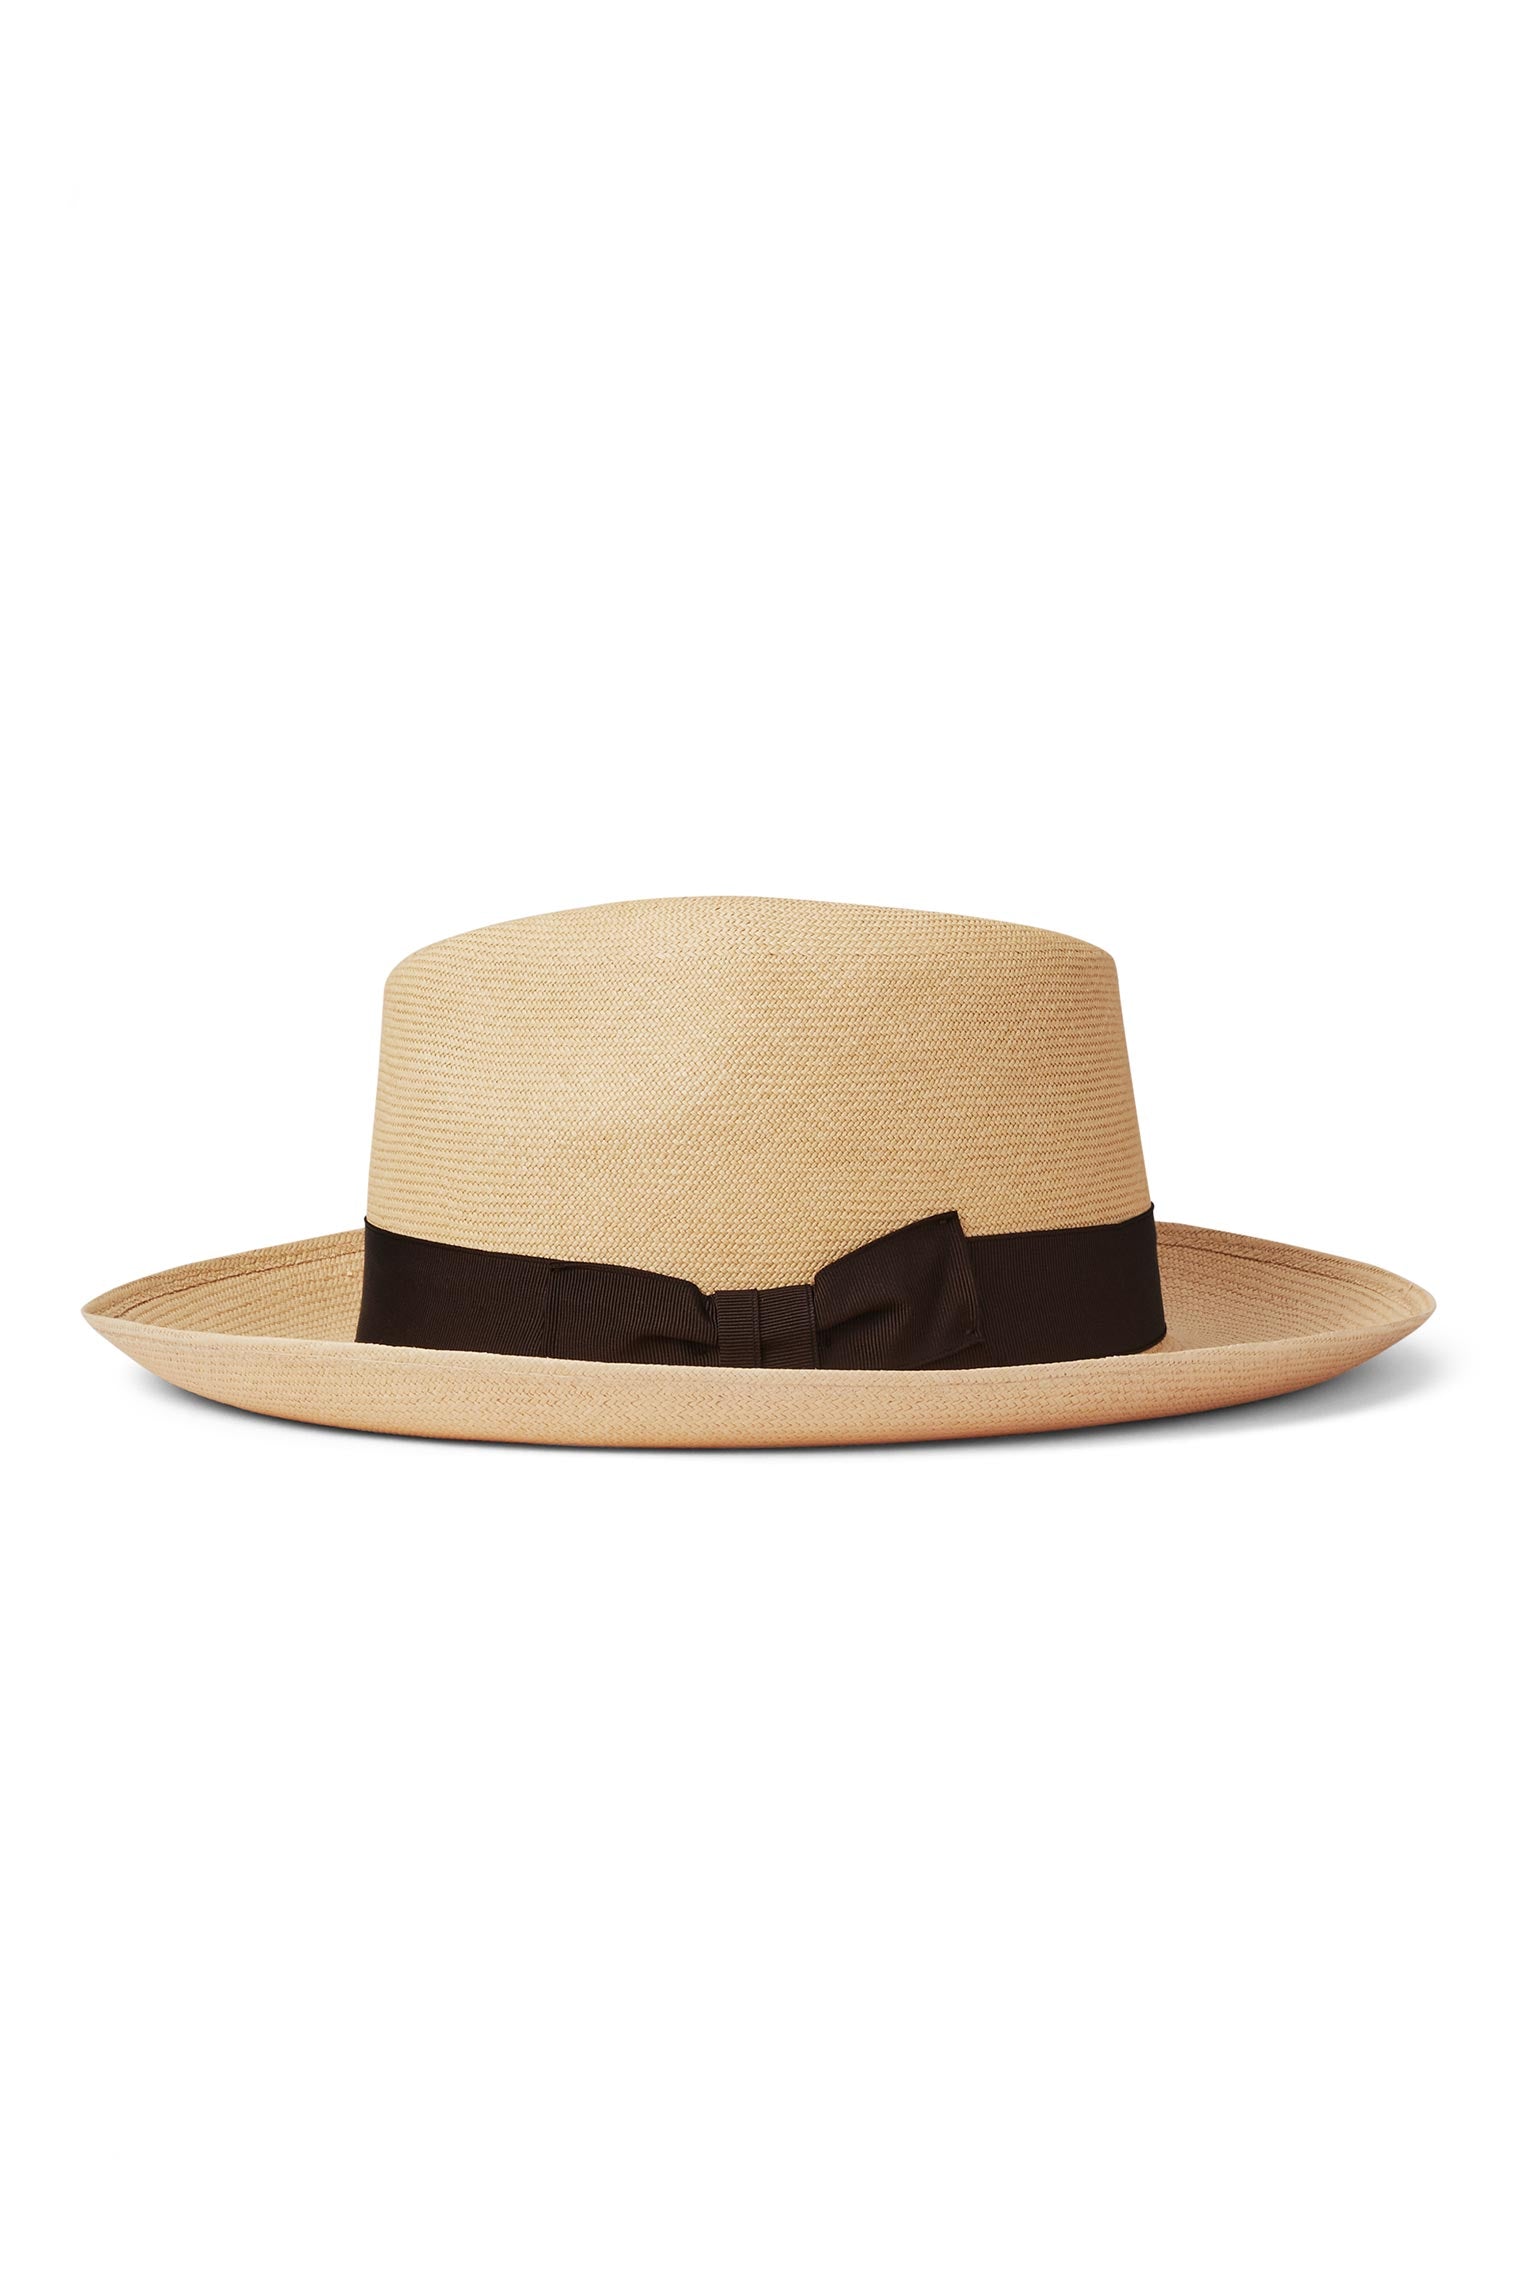 Ventnor Cuenca Ultra-fino Panama - Henley Royal Regatta Hats - Lock & Co. Hatters London UK